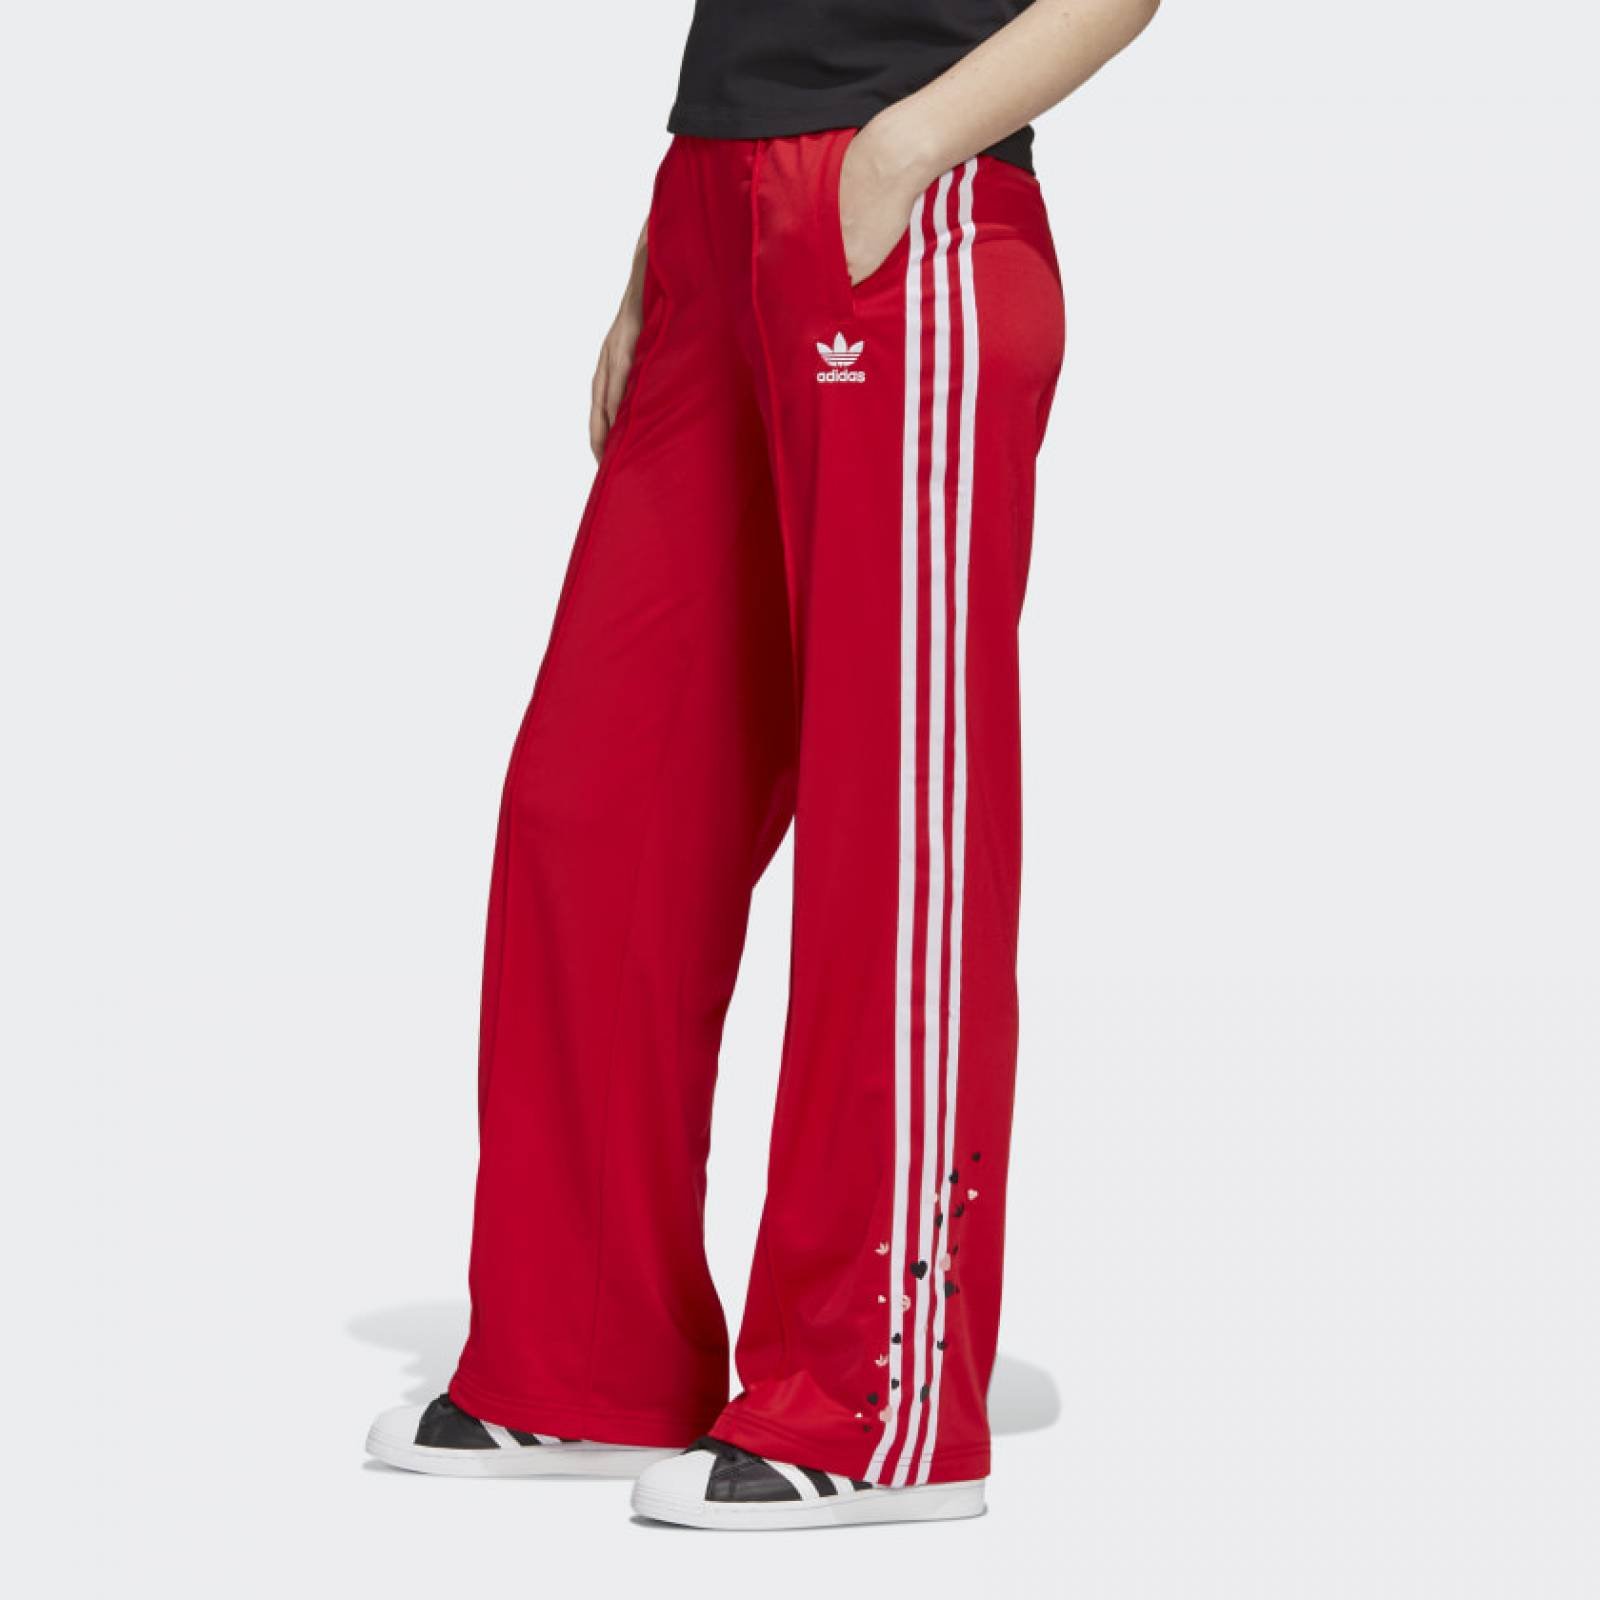 pants adidas originals mujer scarlet trifolio 3 franjas